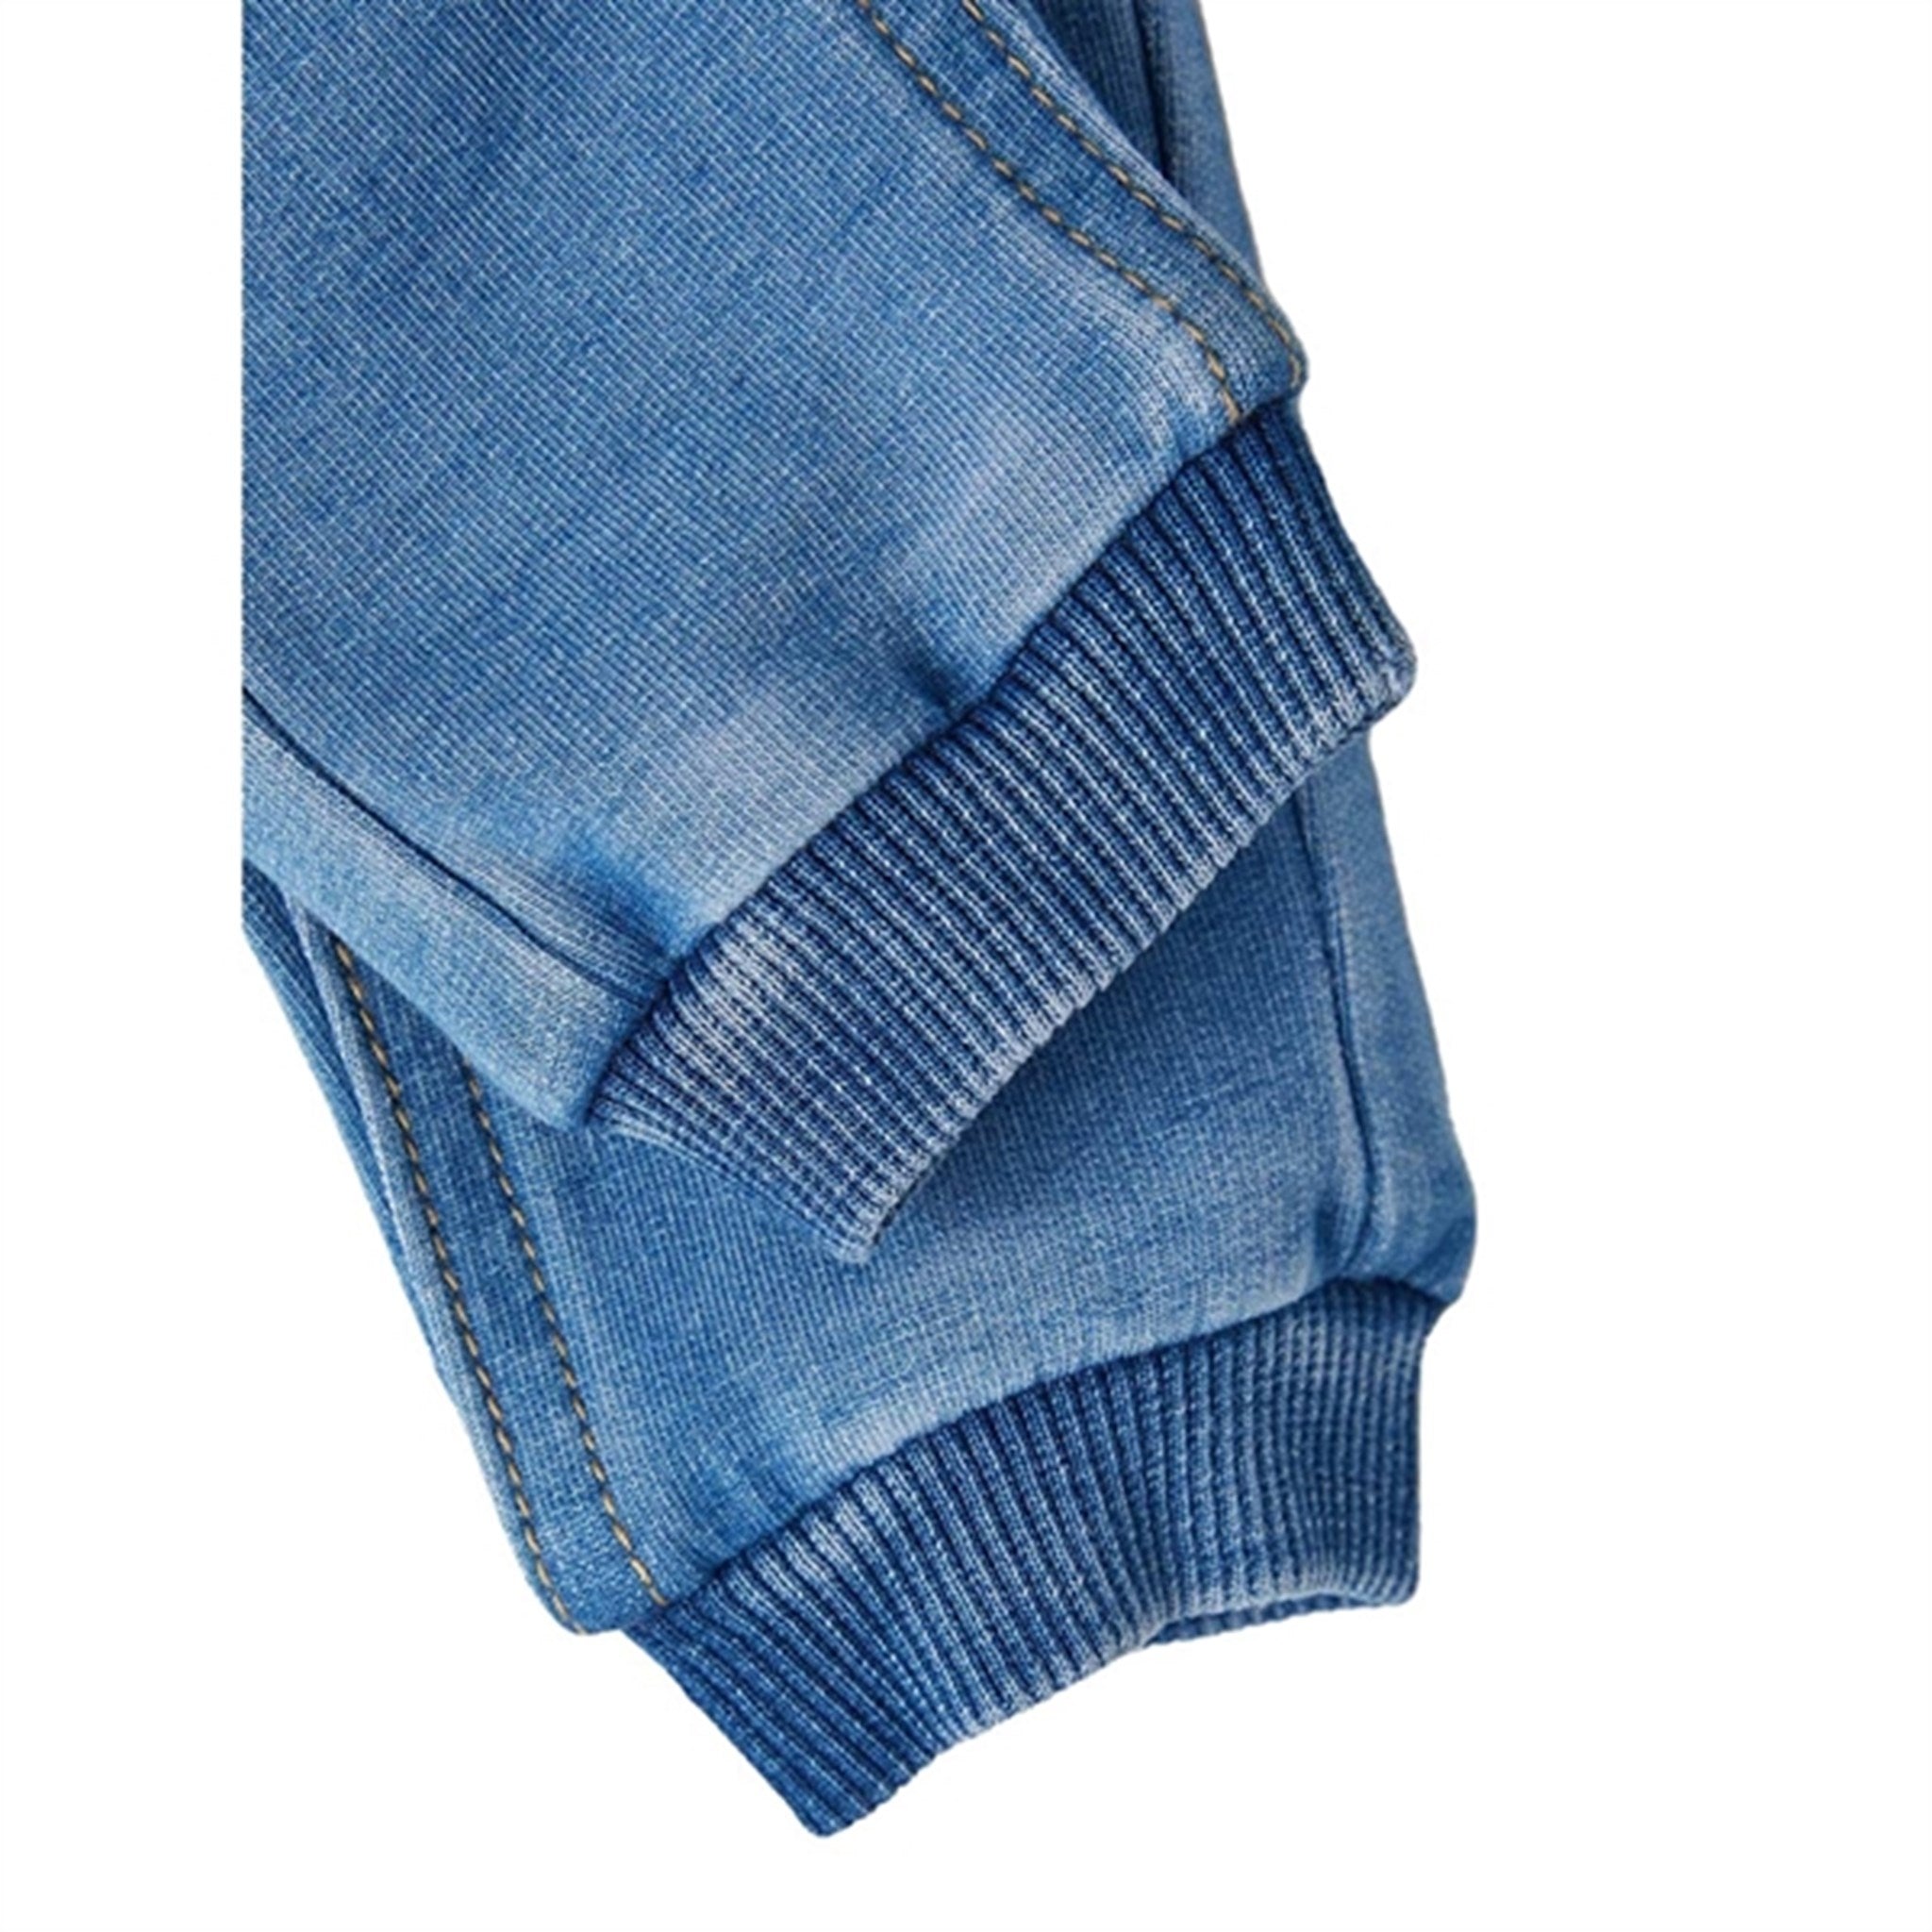 Name it Medium Blue Denim Rome Noos Baggy Jeans 2